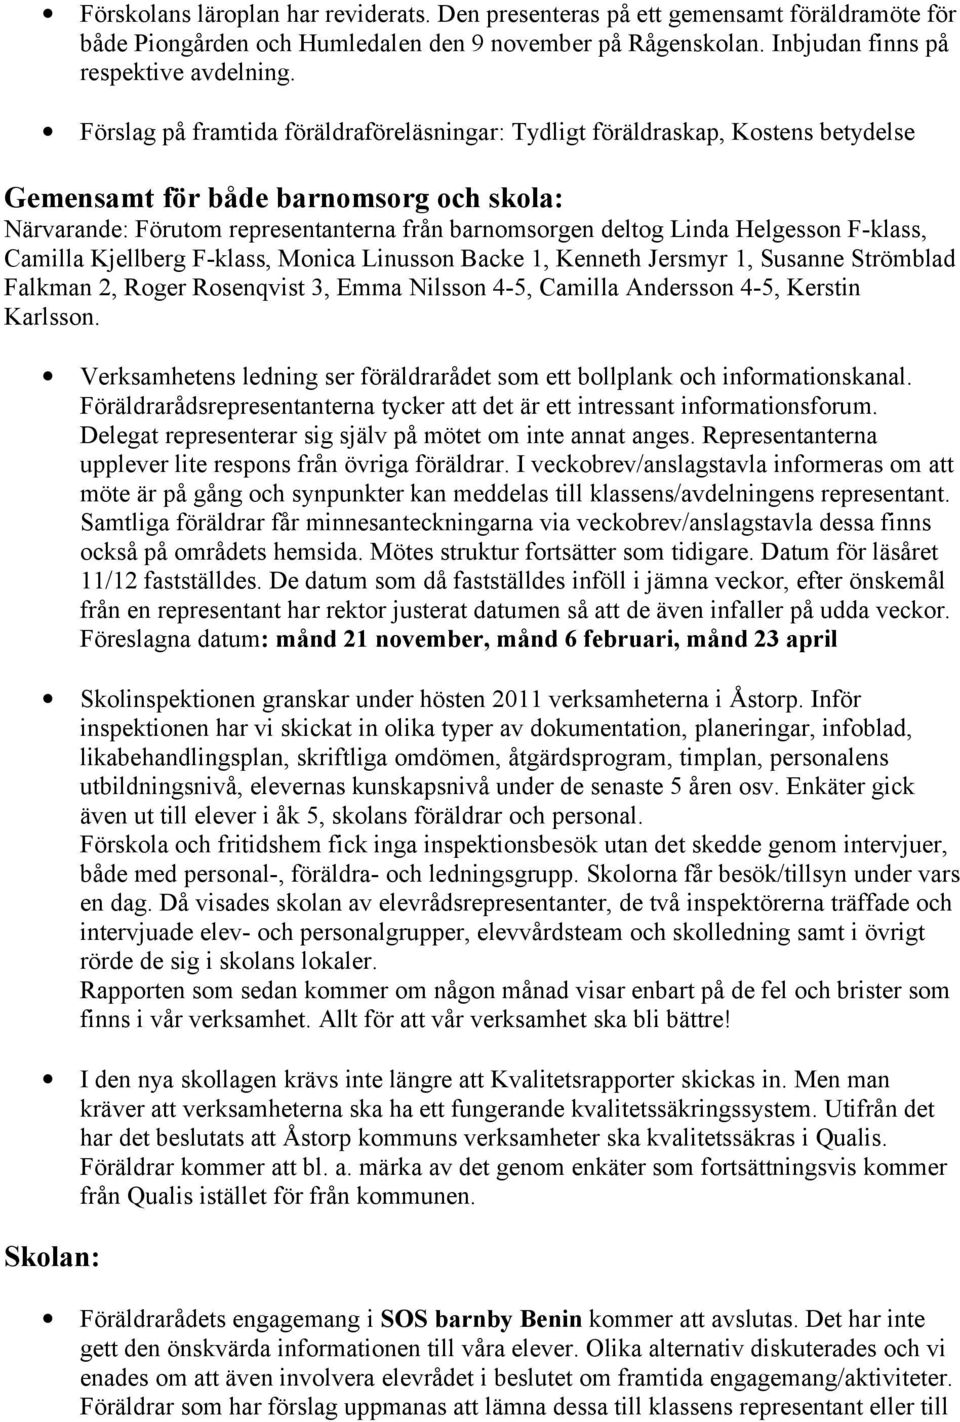 Helgesson F-klass, Camilla Kjellberg F-klass, Monica Linusson Backe 1, Kenneth Jersmyr 1, Susanne Strömblad Falkman 2, Roger Rosenqvist 3, Emma Nilsson 4-5, Camilla Andersson 4-5, Kerstin Karlsson.